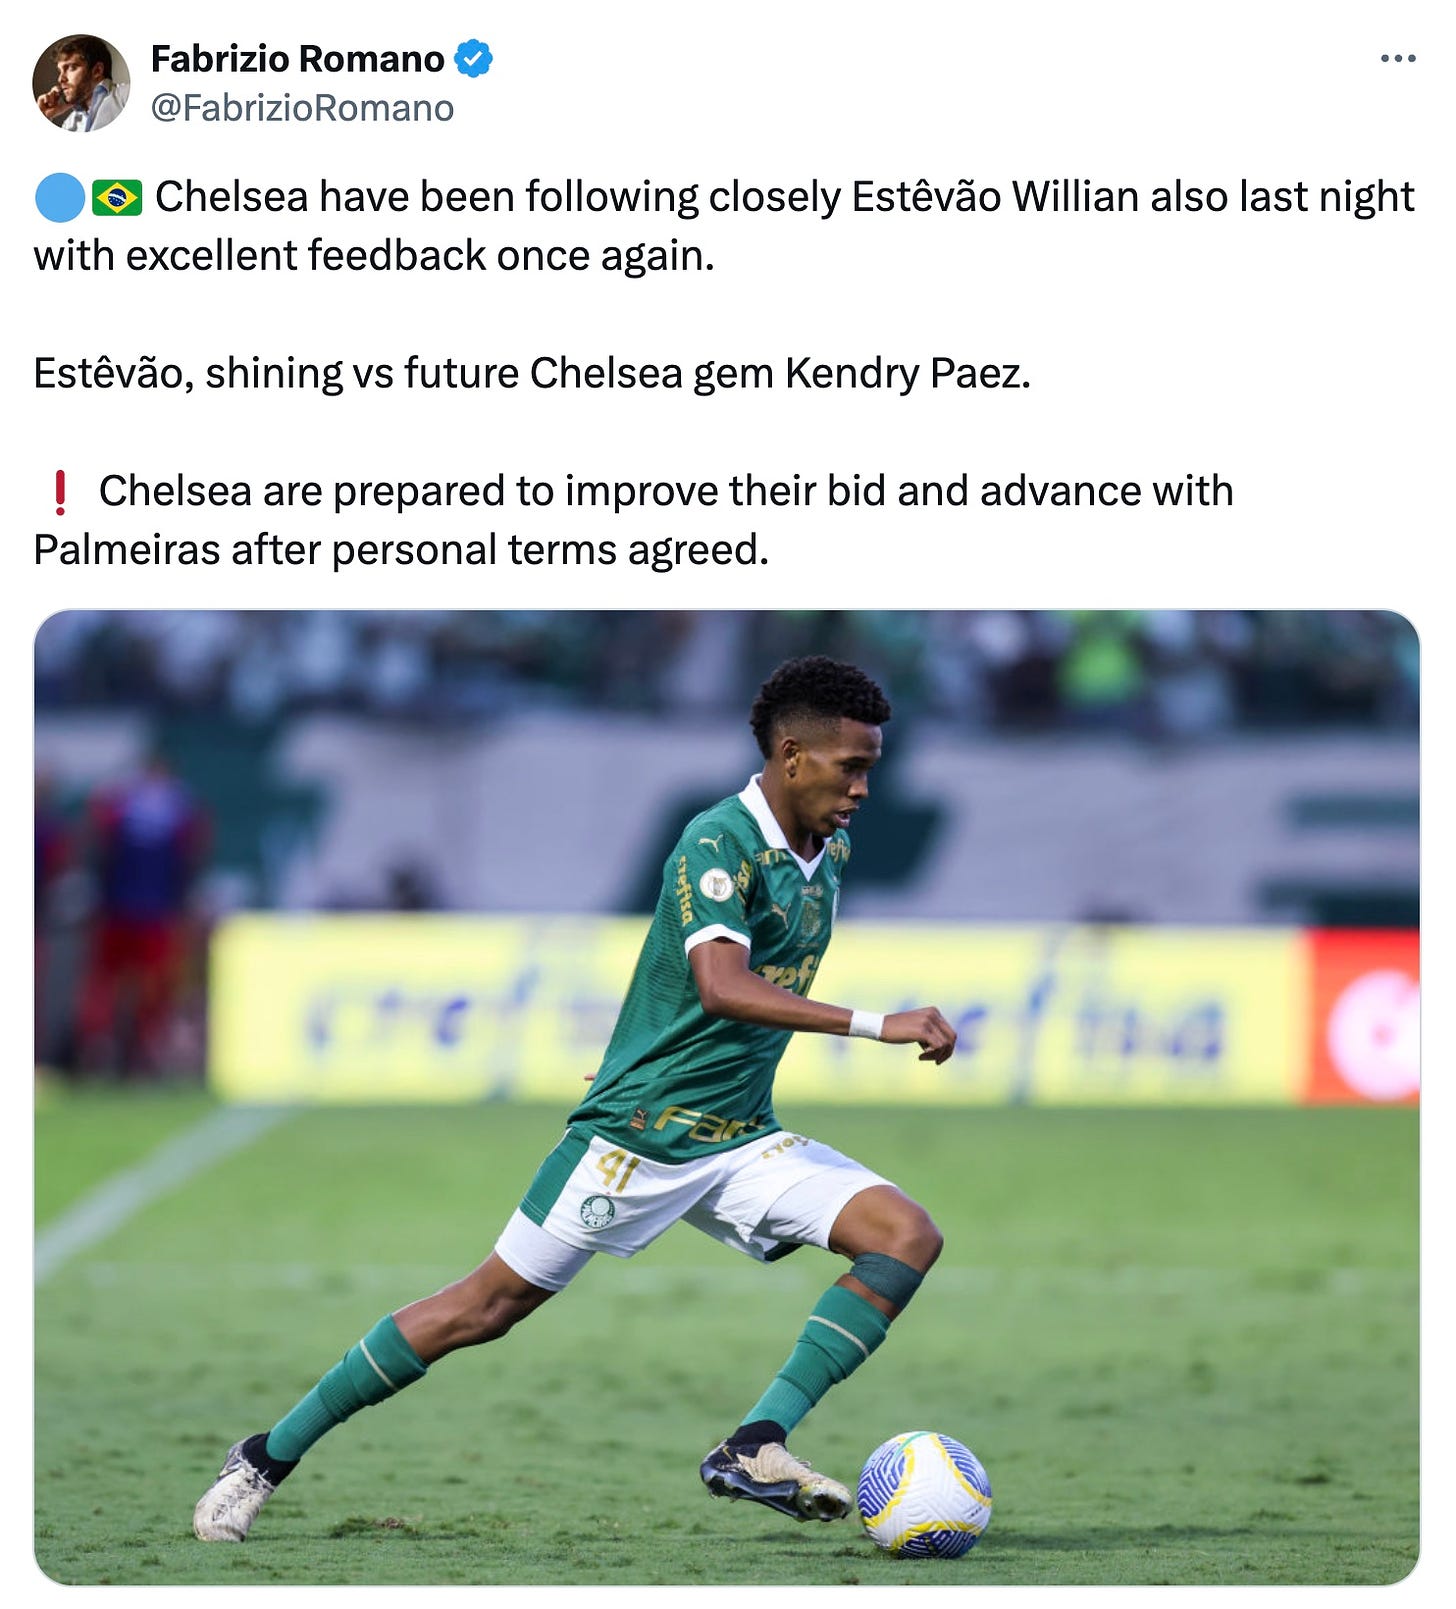 A tweet by Fabrizio Romano about Estevao Willian